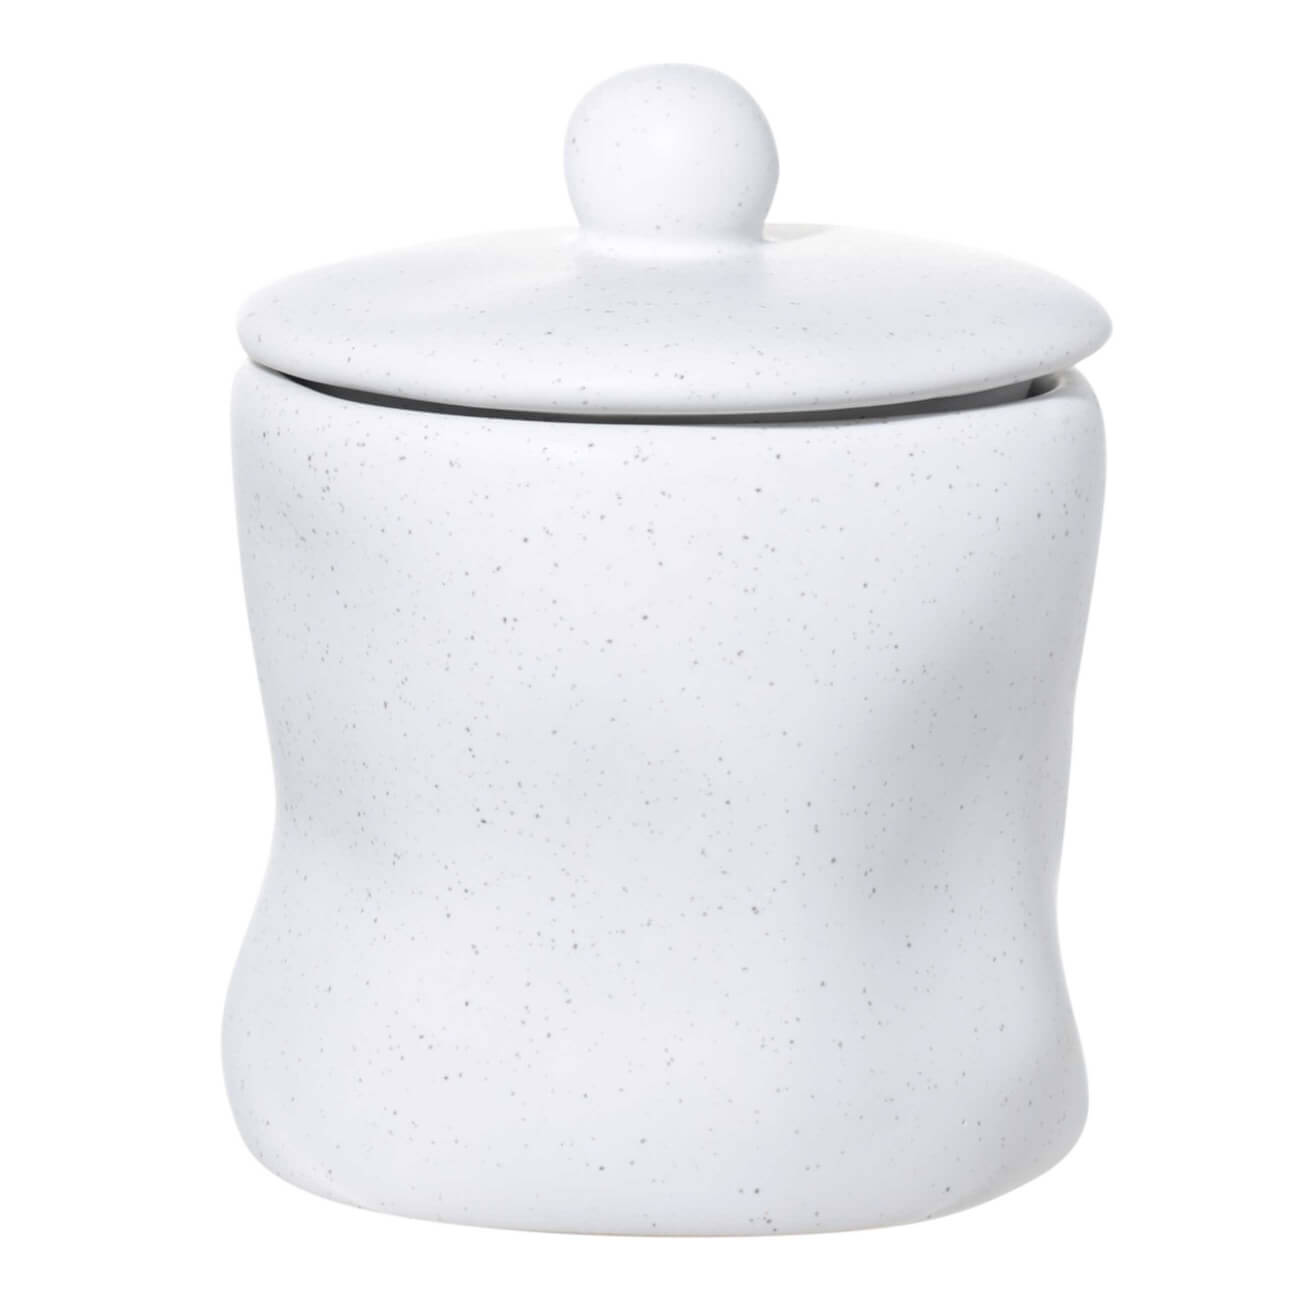 Шкатулка для ванной, 9х11 см, керамика, белая, в крапинку, Delicia шкатулка двойная белая лаковая миниатюра